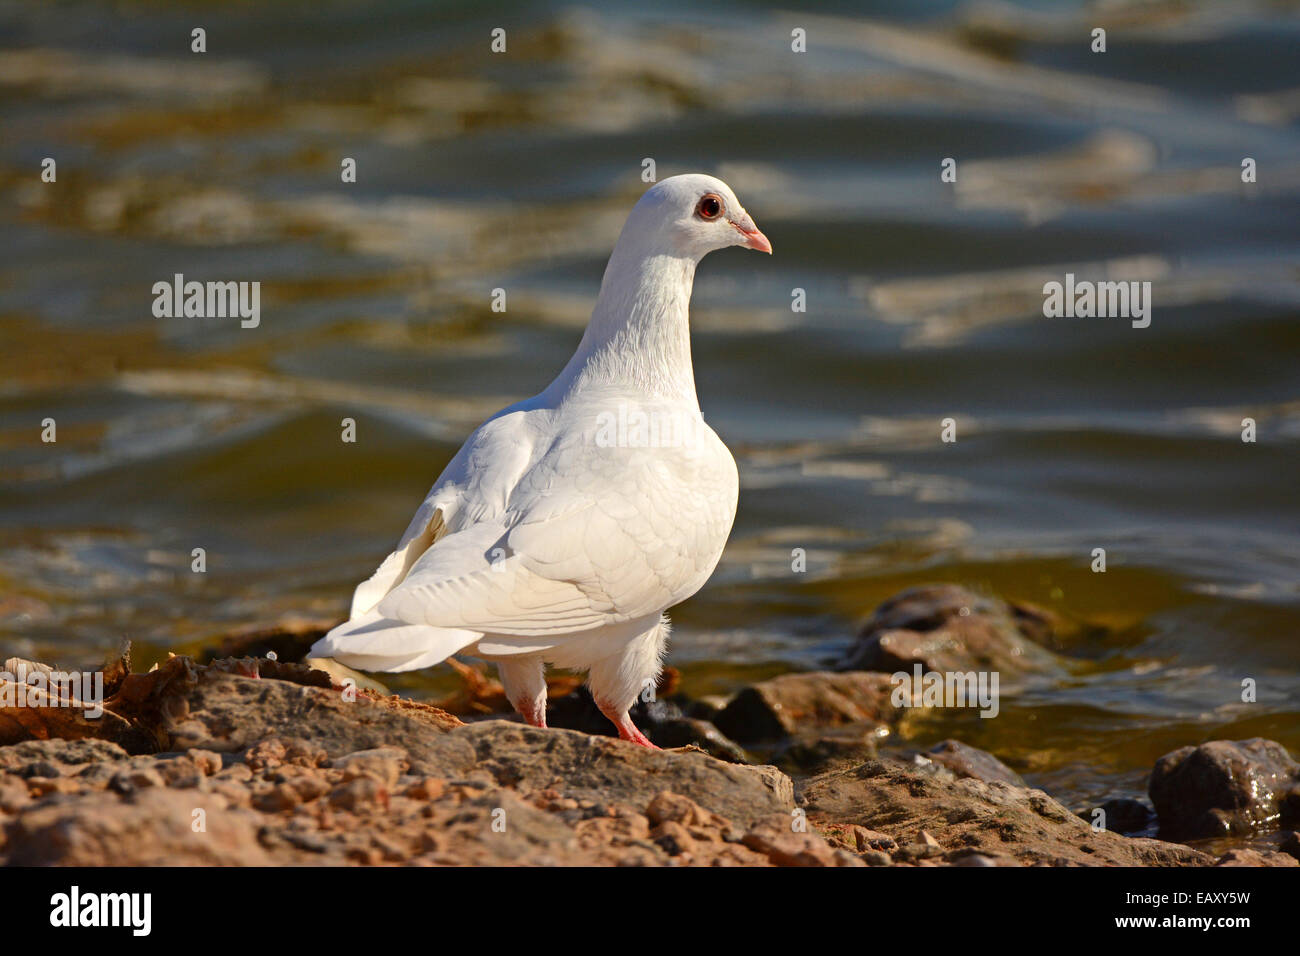 White pigeon near water Stock Photo